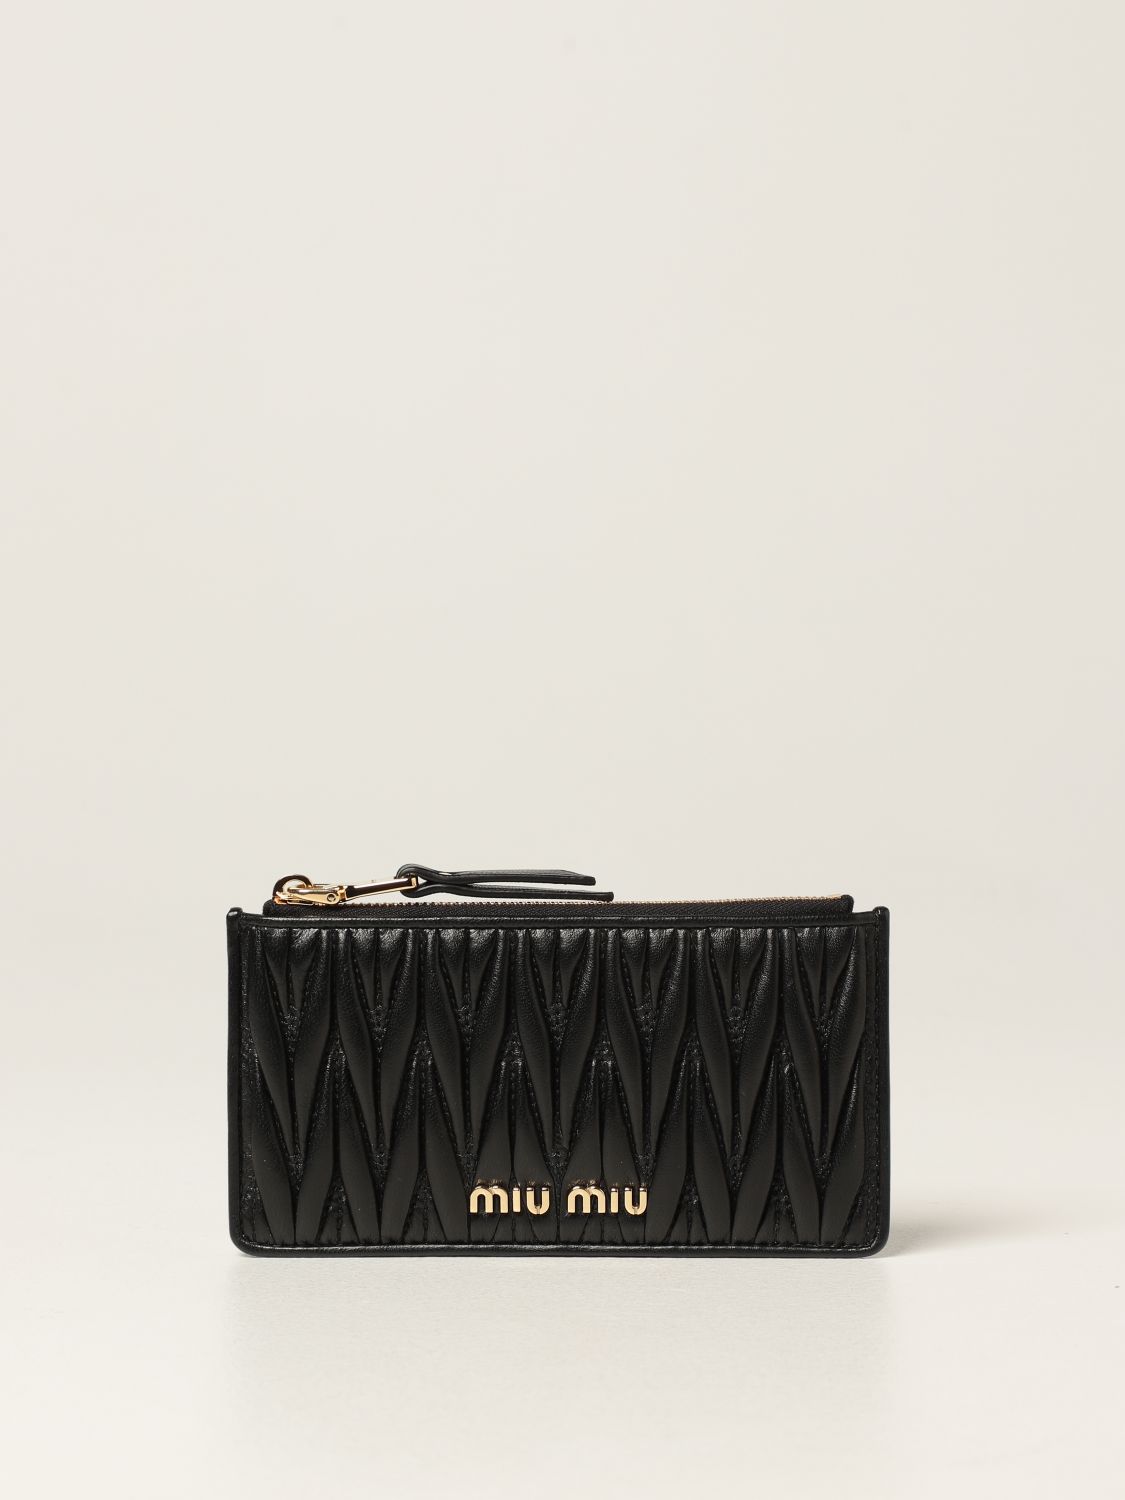 MIU MIU: wallet in quilted leather with logo - Black | Miu Miu 5MB006N88 on GIGLIO.COM